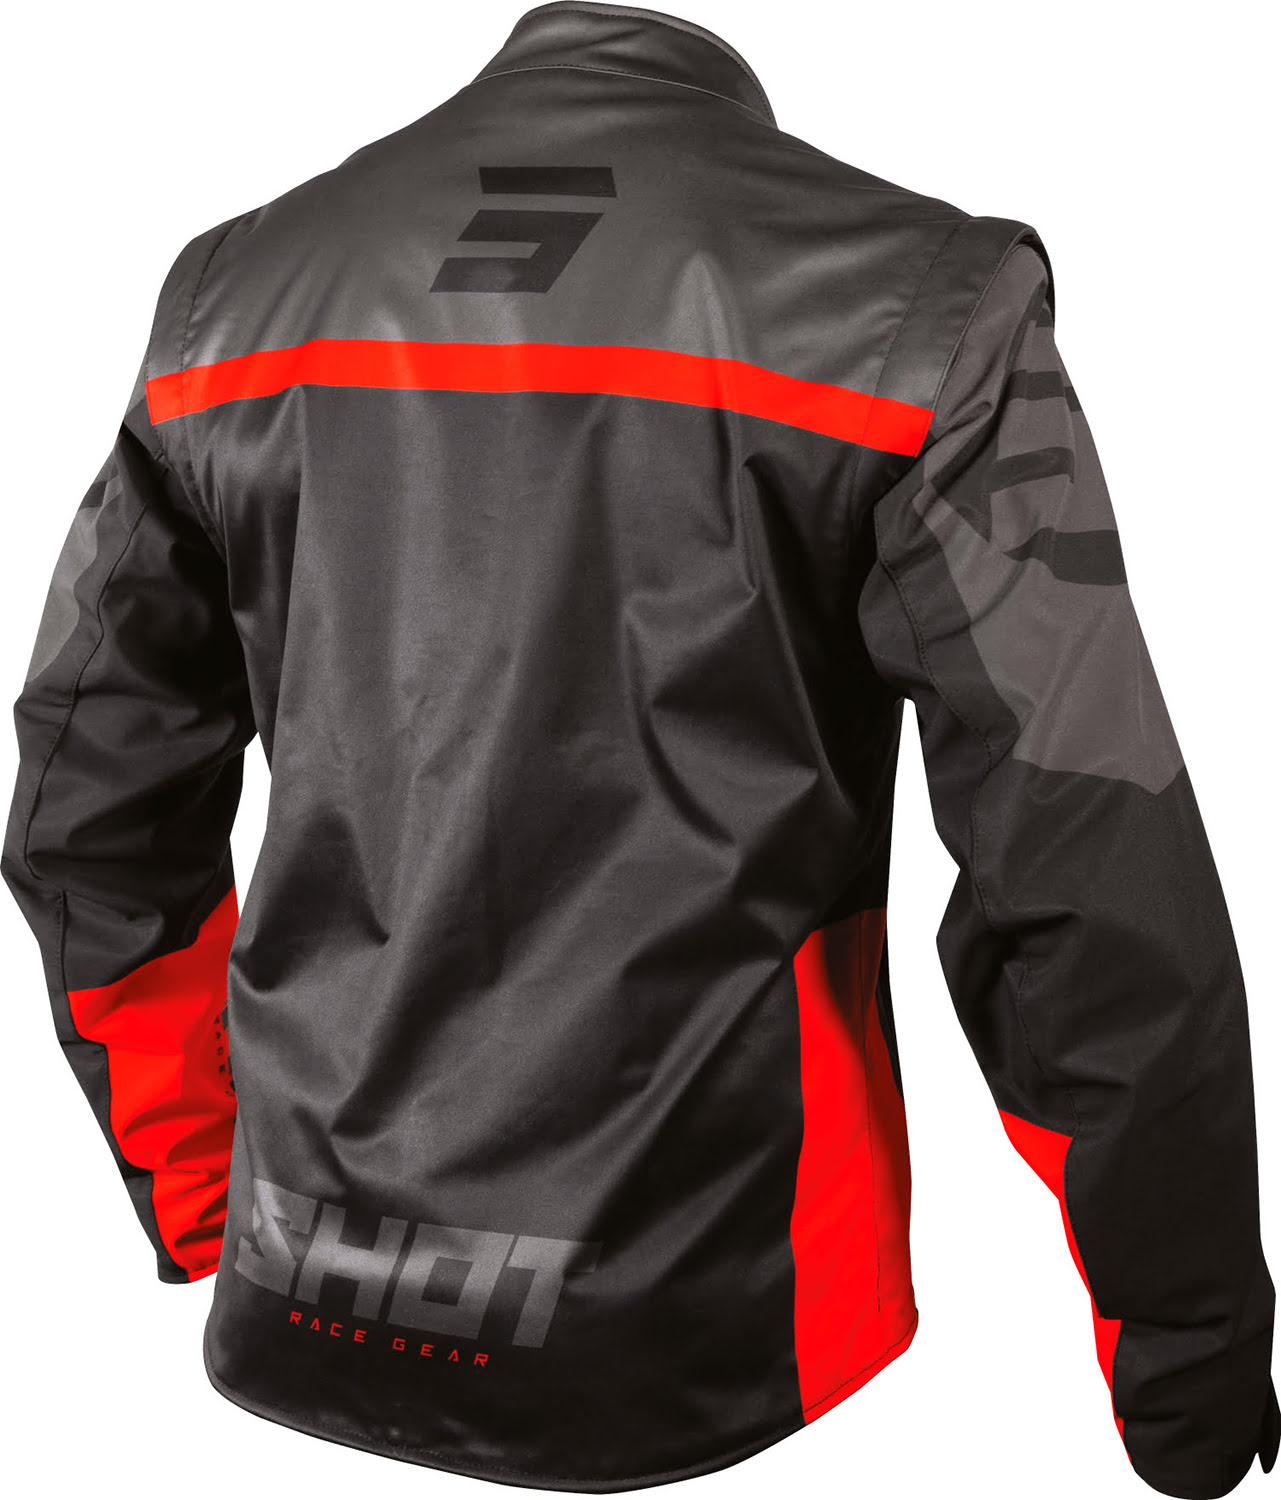 Jacket SOFTSHELL LITE 2.0 BLACK / RED SHOT 